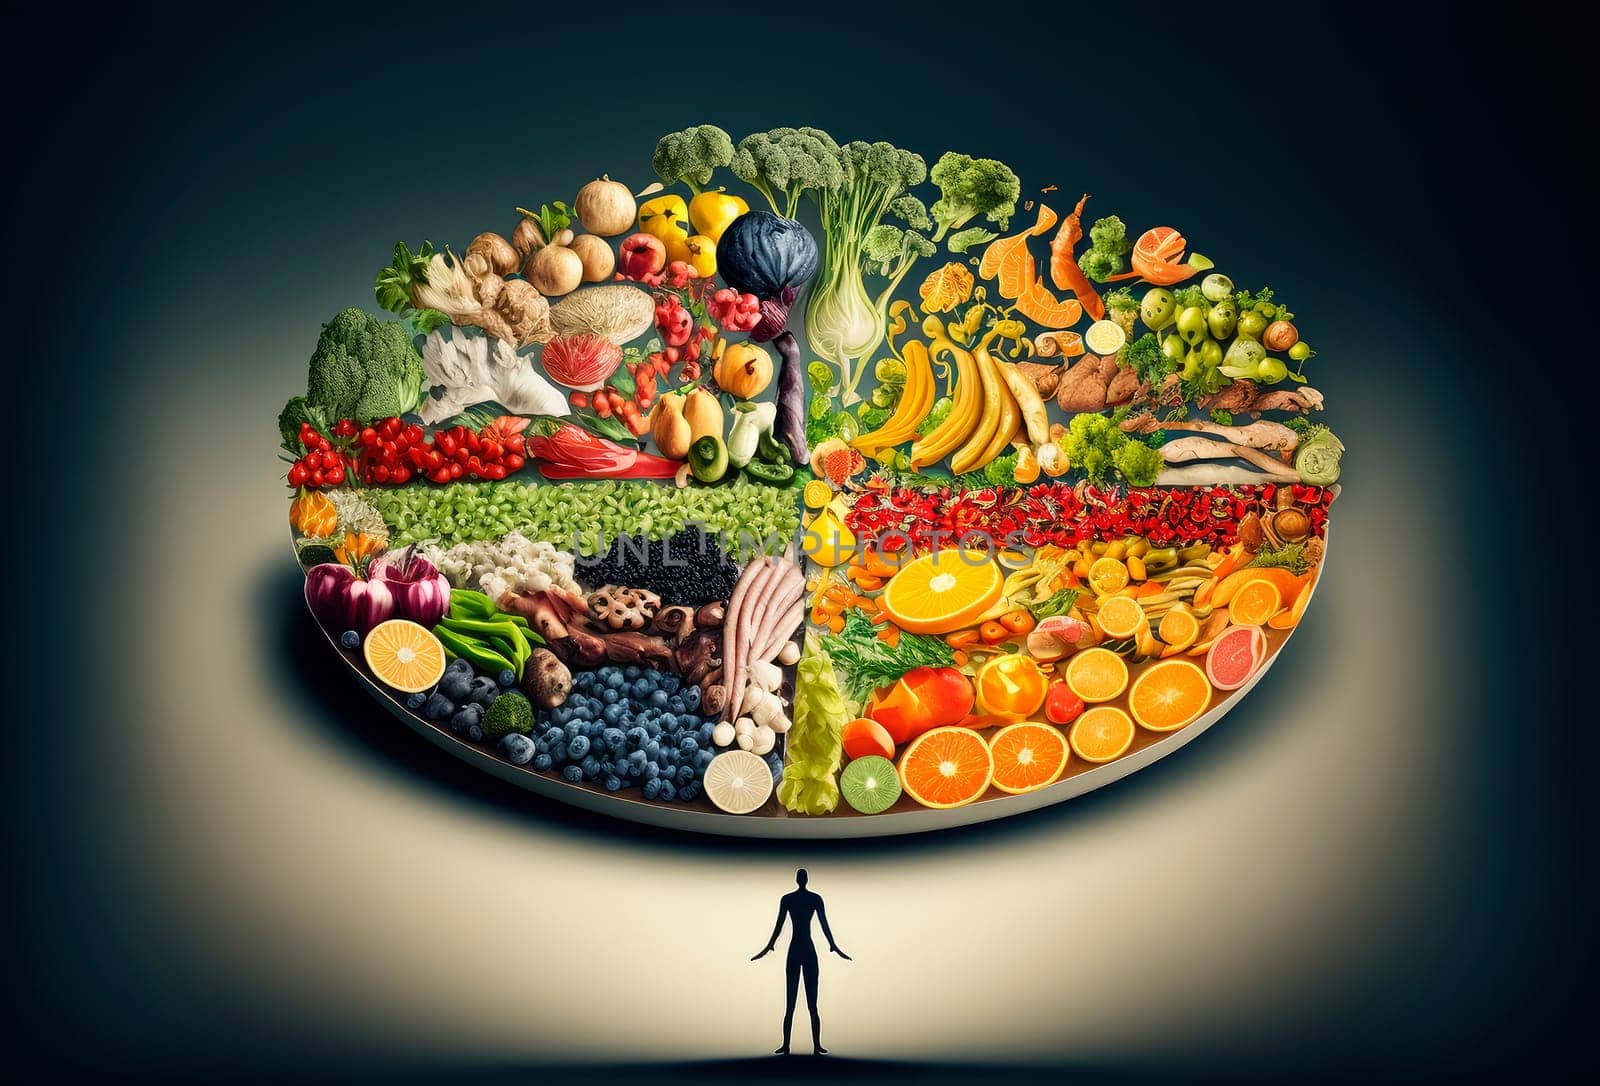 Proper nutrition of fruits and vegetables. by yanadjana